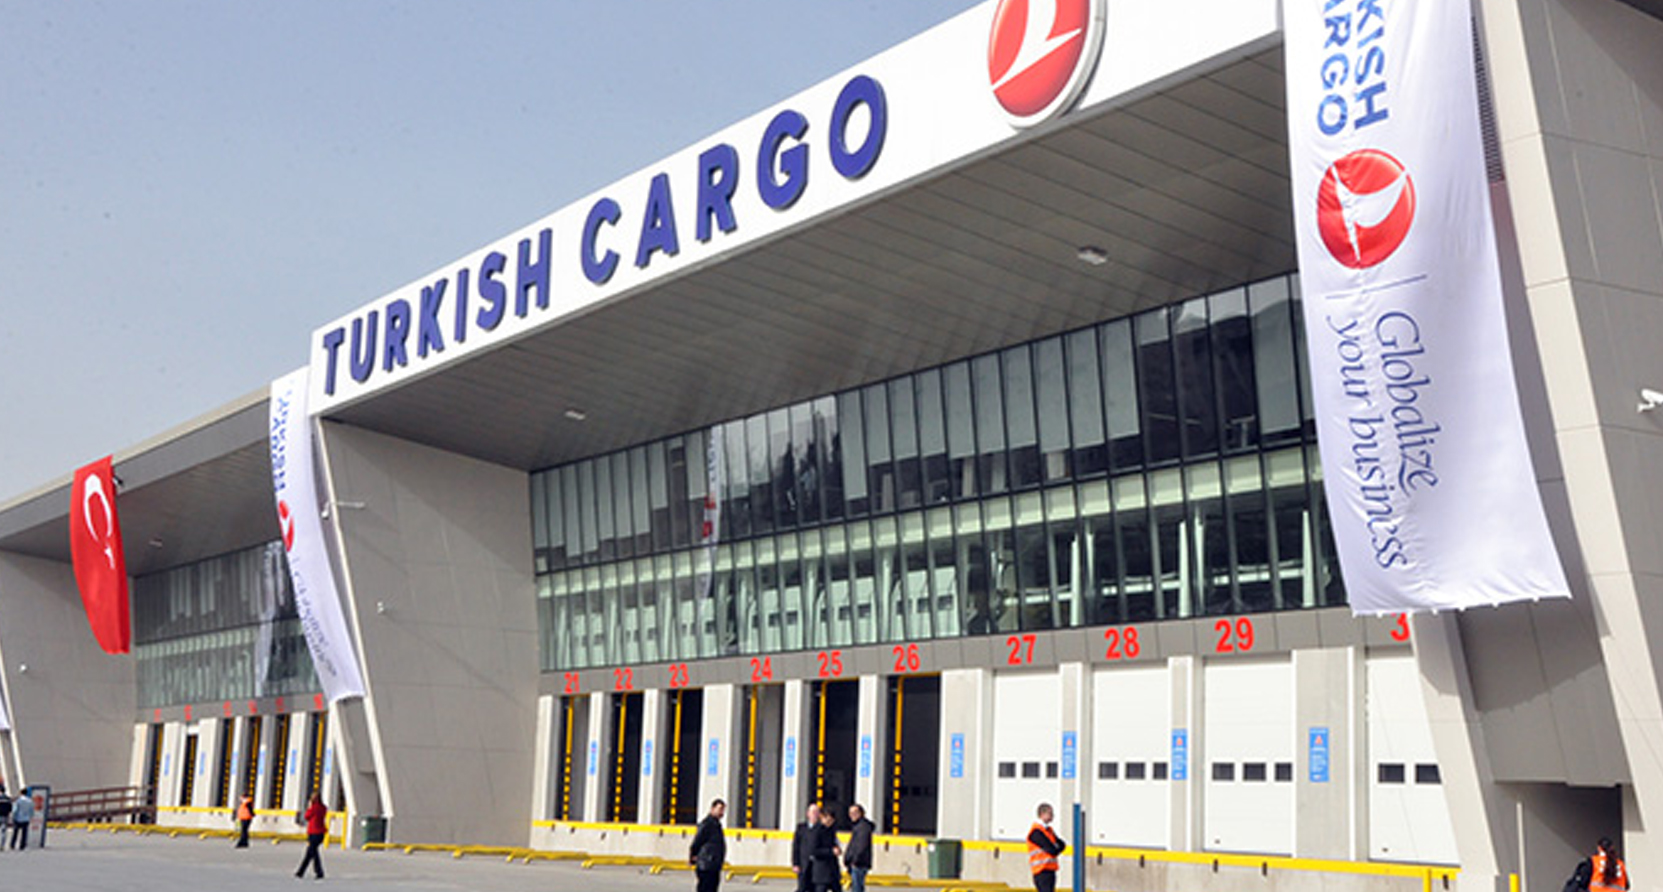 Turkish Airlines Cargo Terminal Ataturk Airport